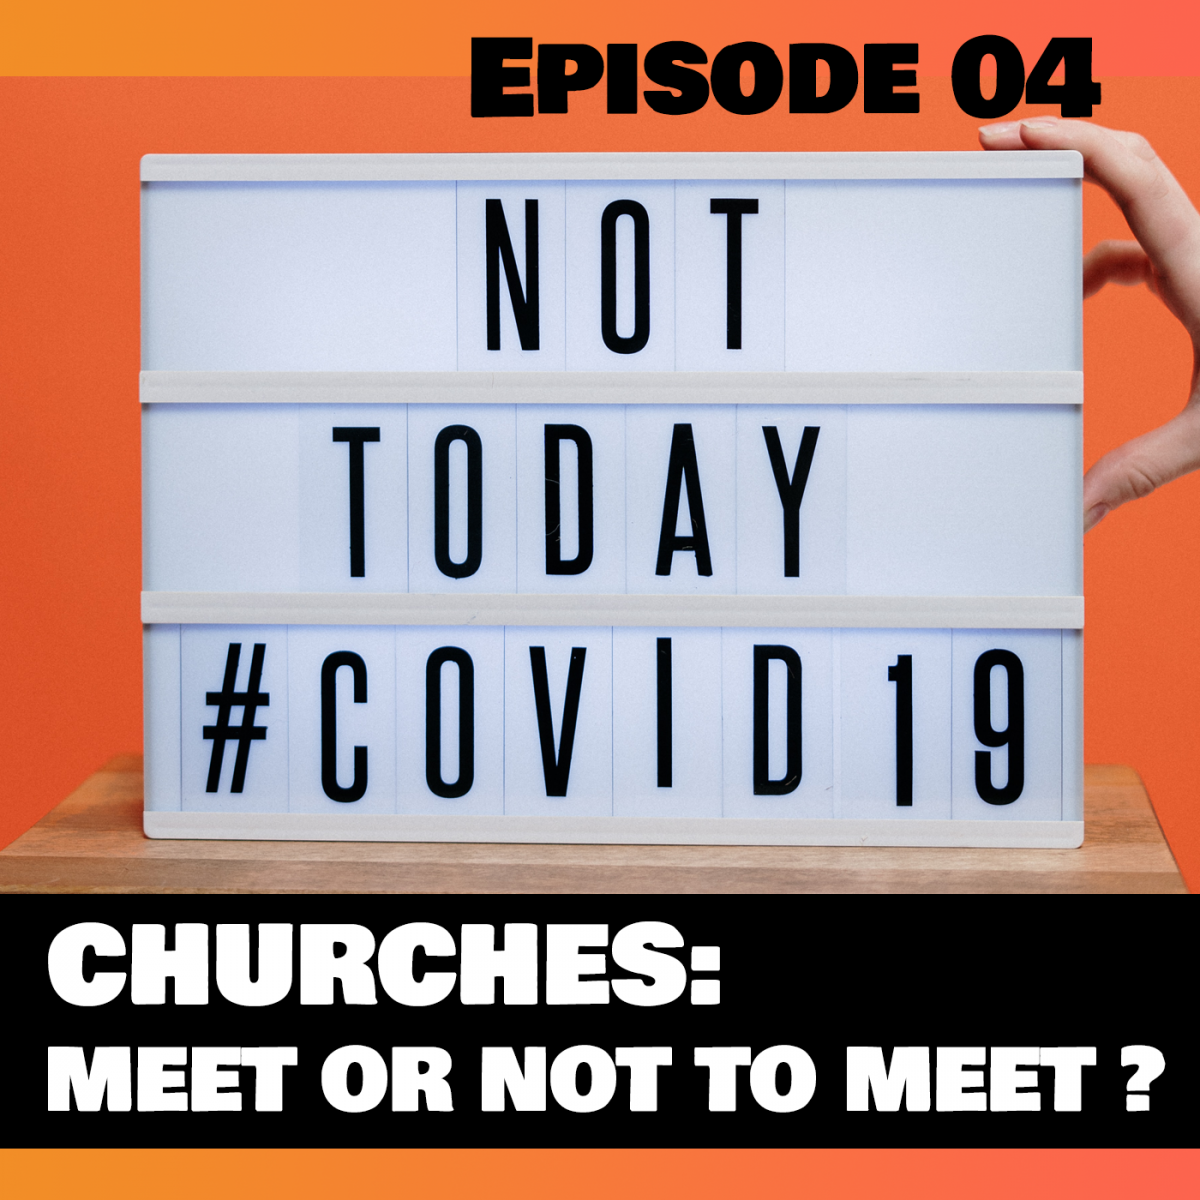 Churches: Meet or Not to Meet?